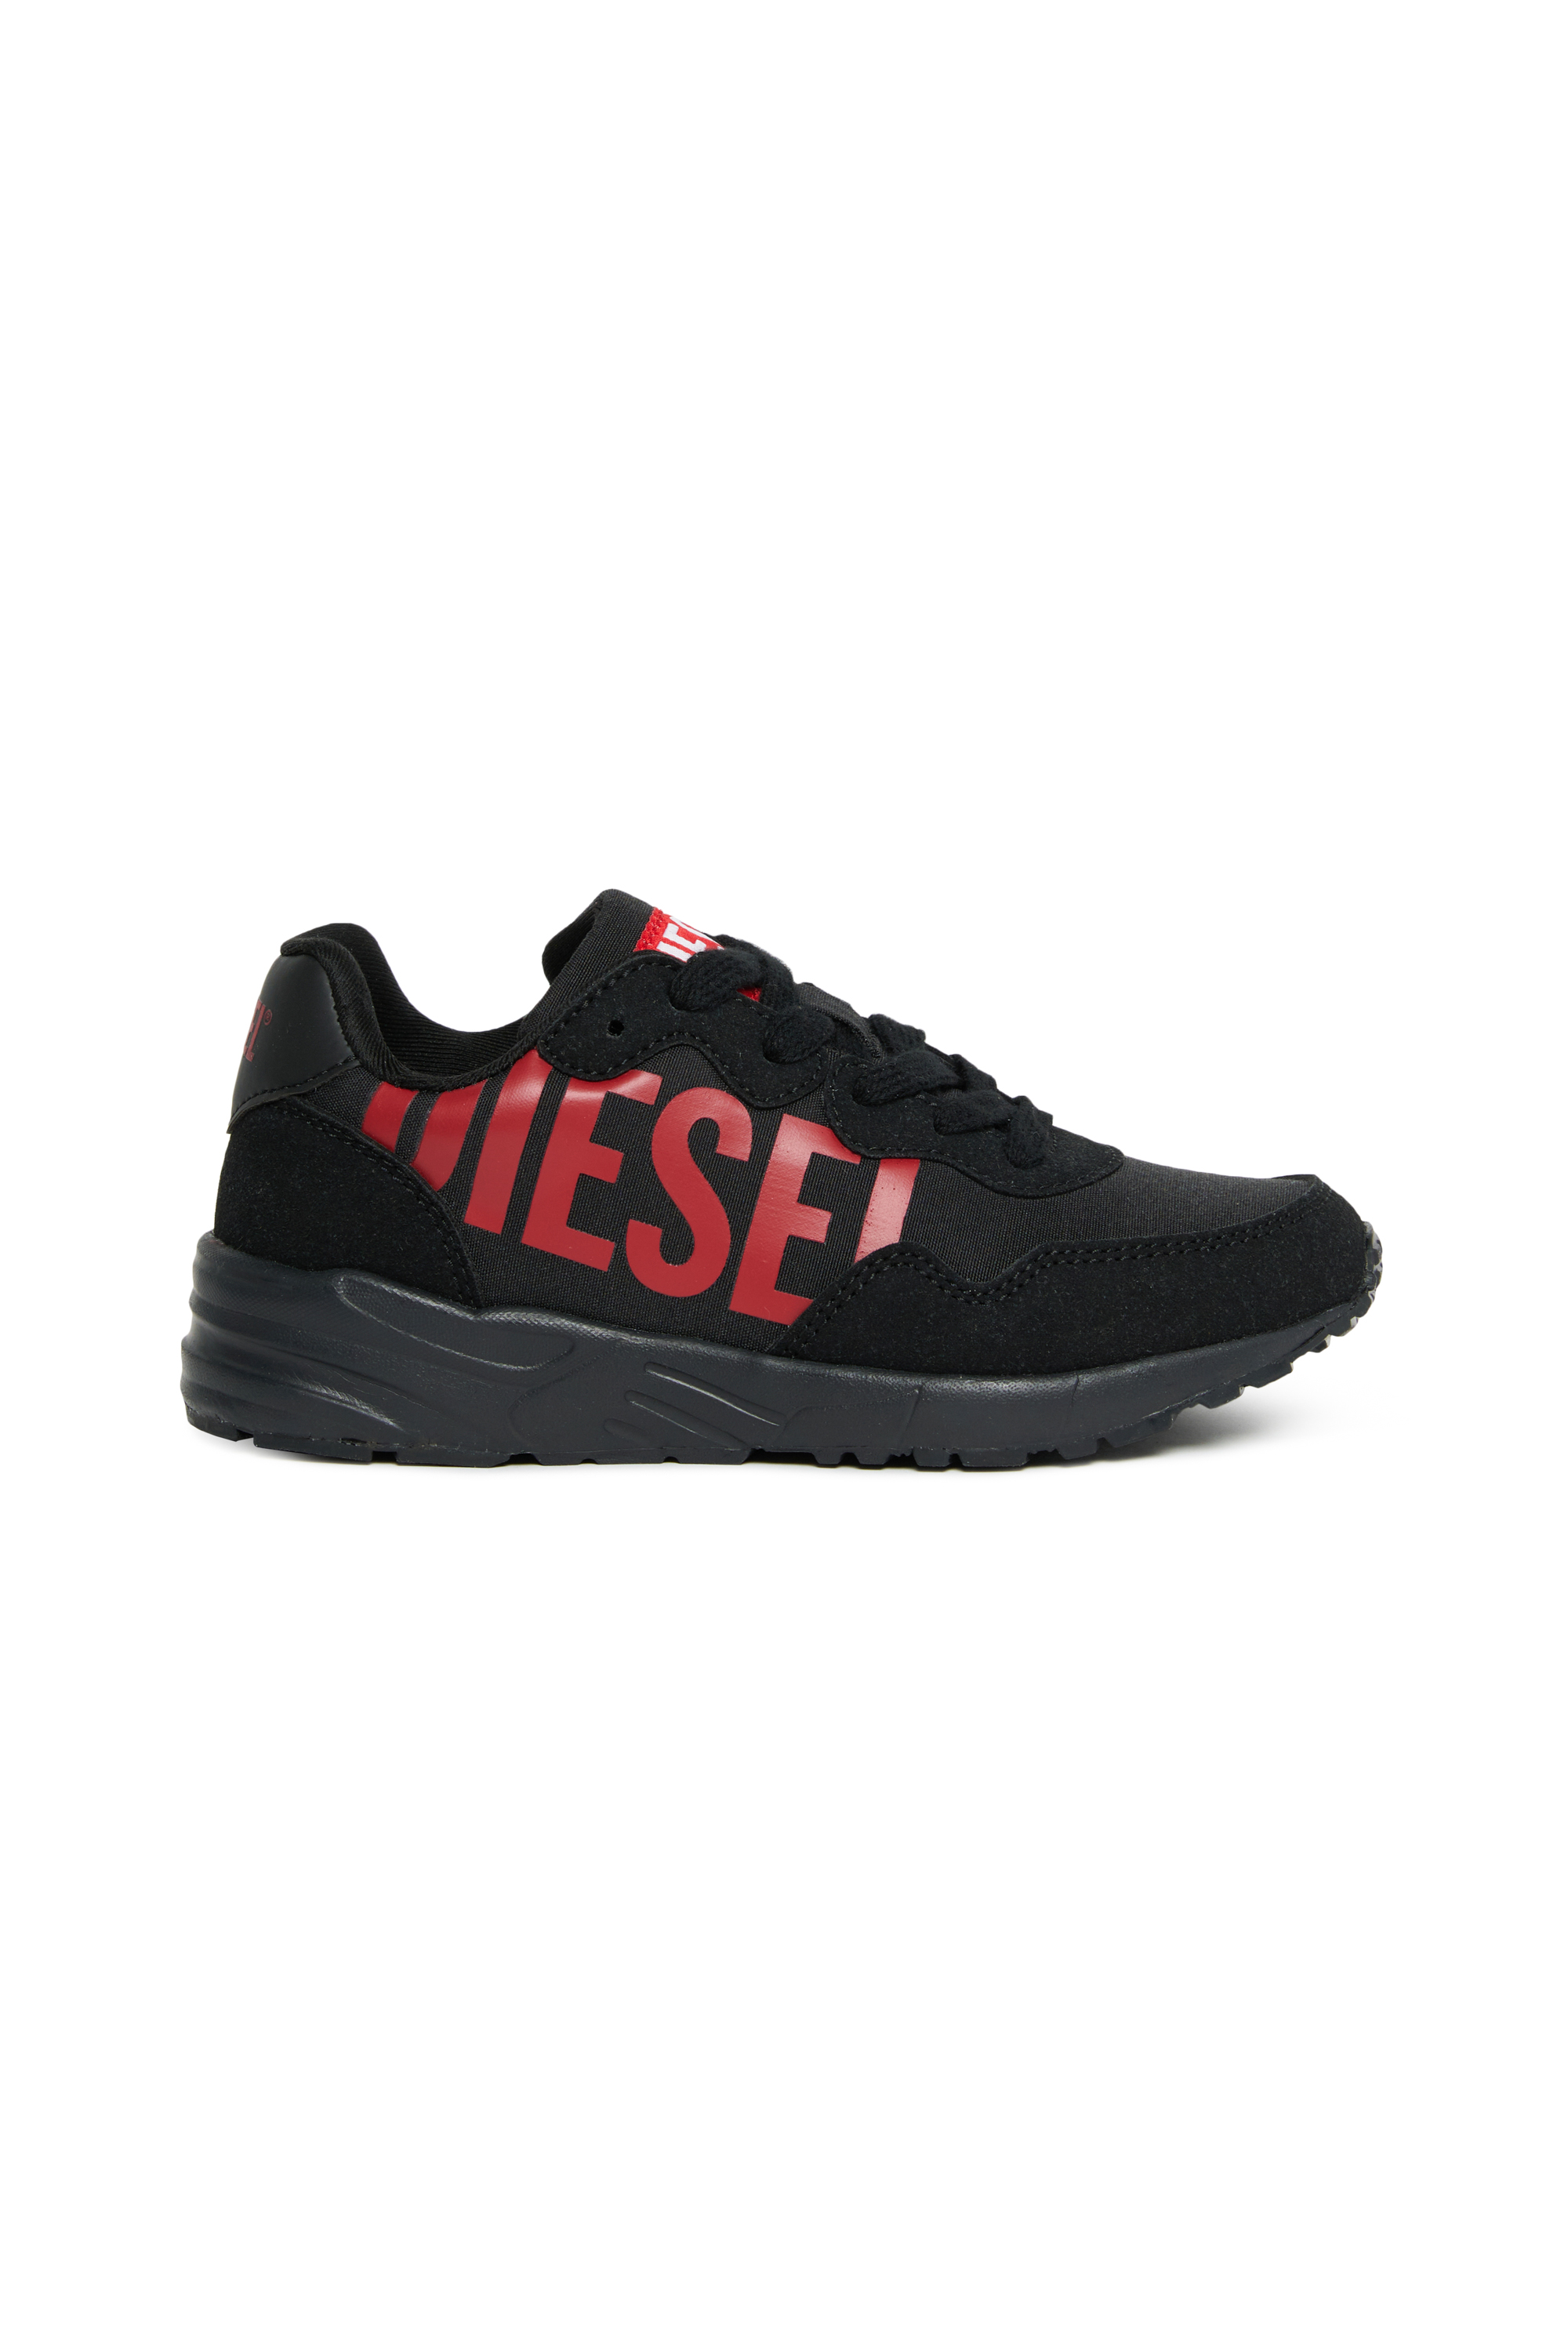 Diesel - S-STAR LIGHT LC, Unisex Sneaker in nylon con stampa Diesel lucida in Multicolor - Image 1